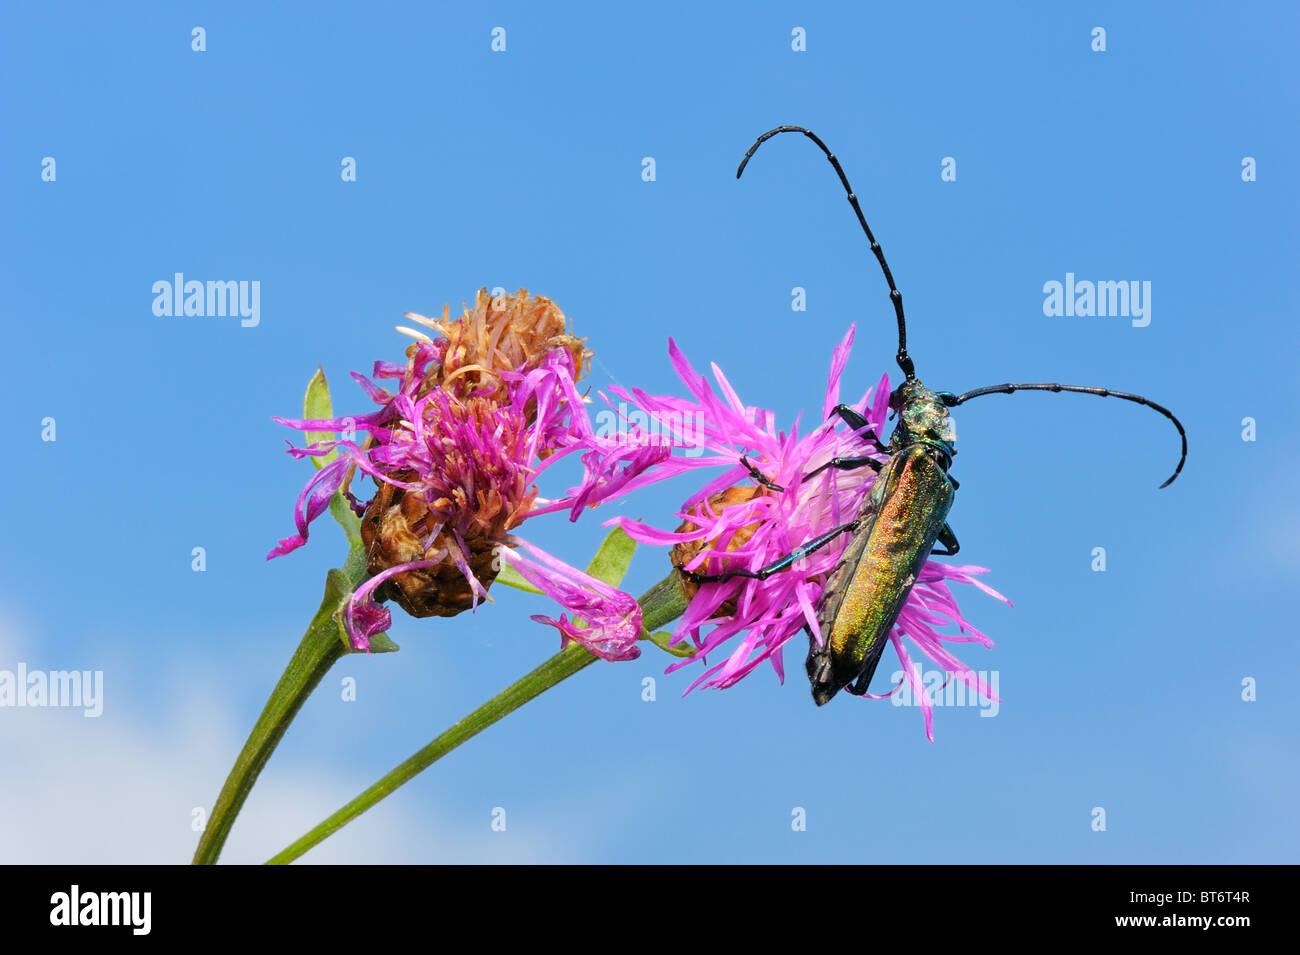 Longhorn beetle on a flower. Stock Photo